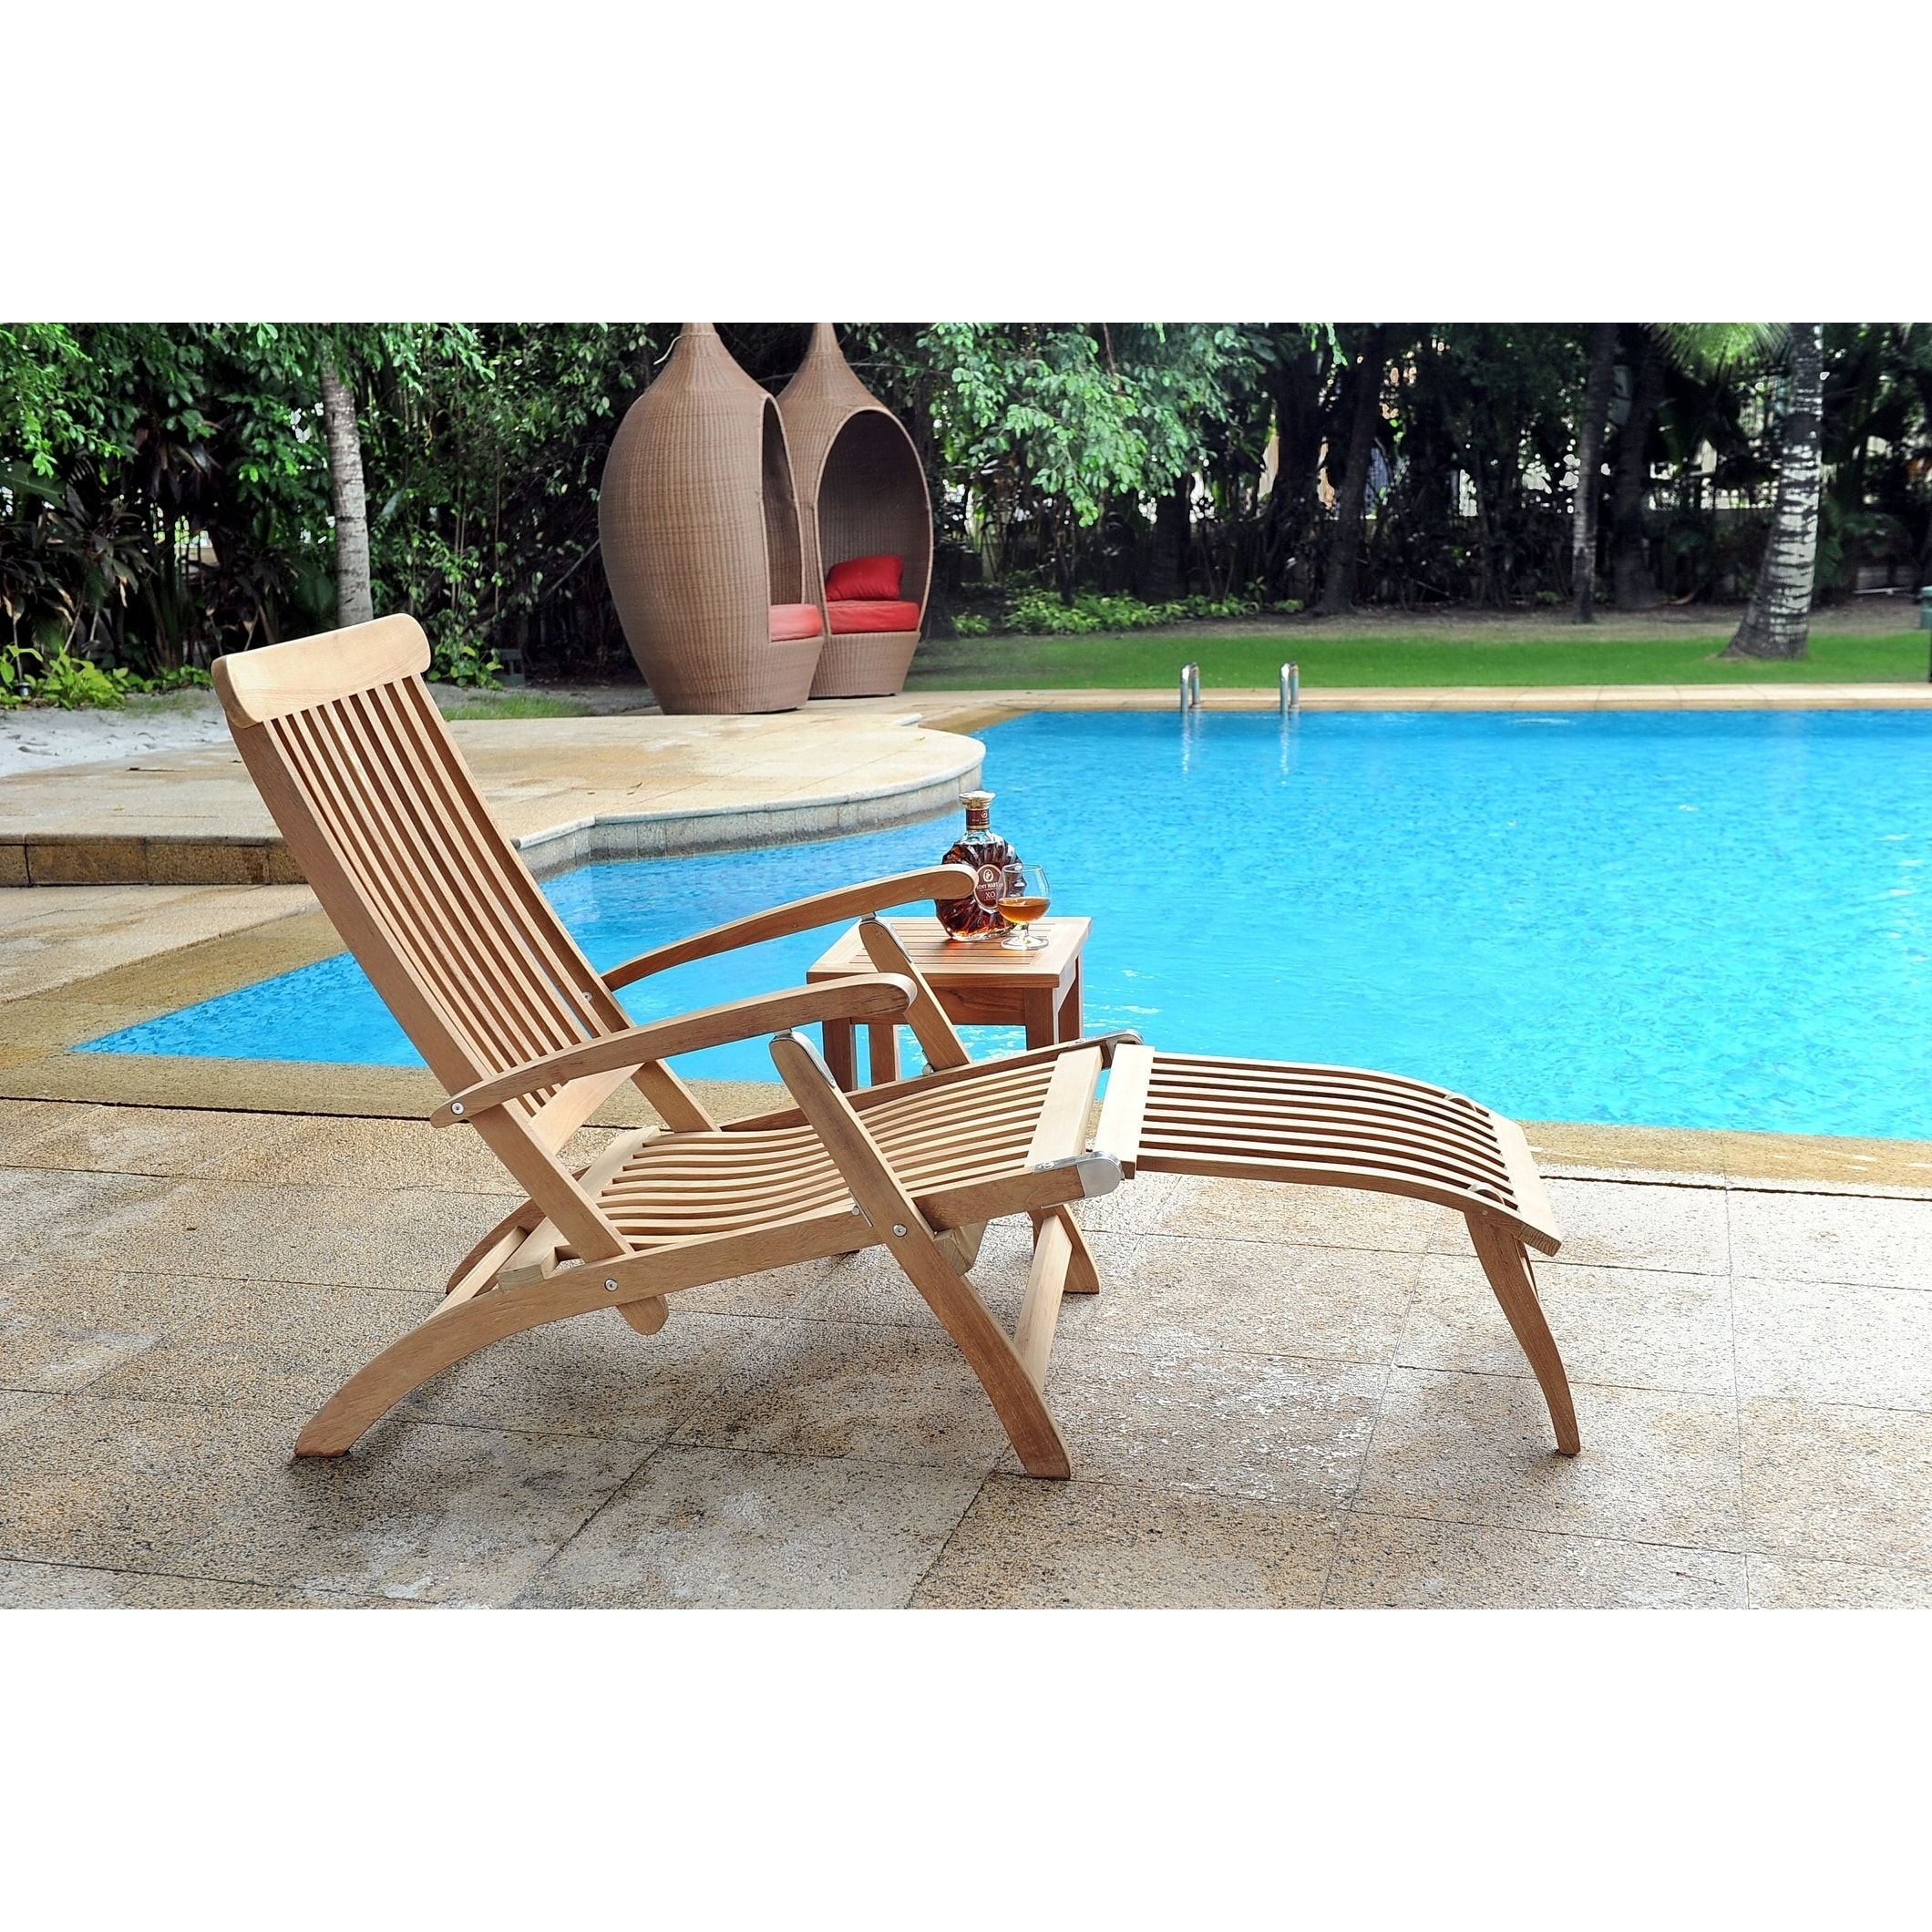 Hiteak Steamer Outdoor Folding Teak Chaise Lounge Chair – Walmart For Teak Outdoor Folding Armchairs (View 4 of 15)